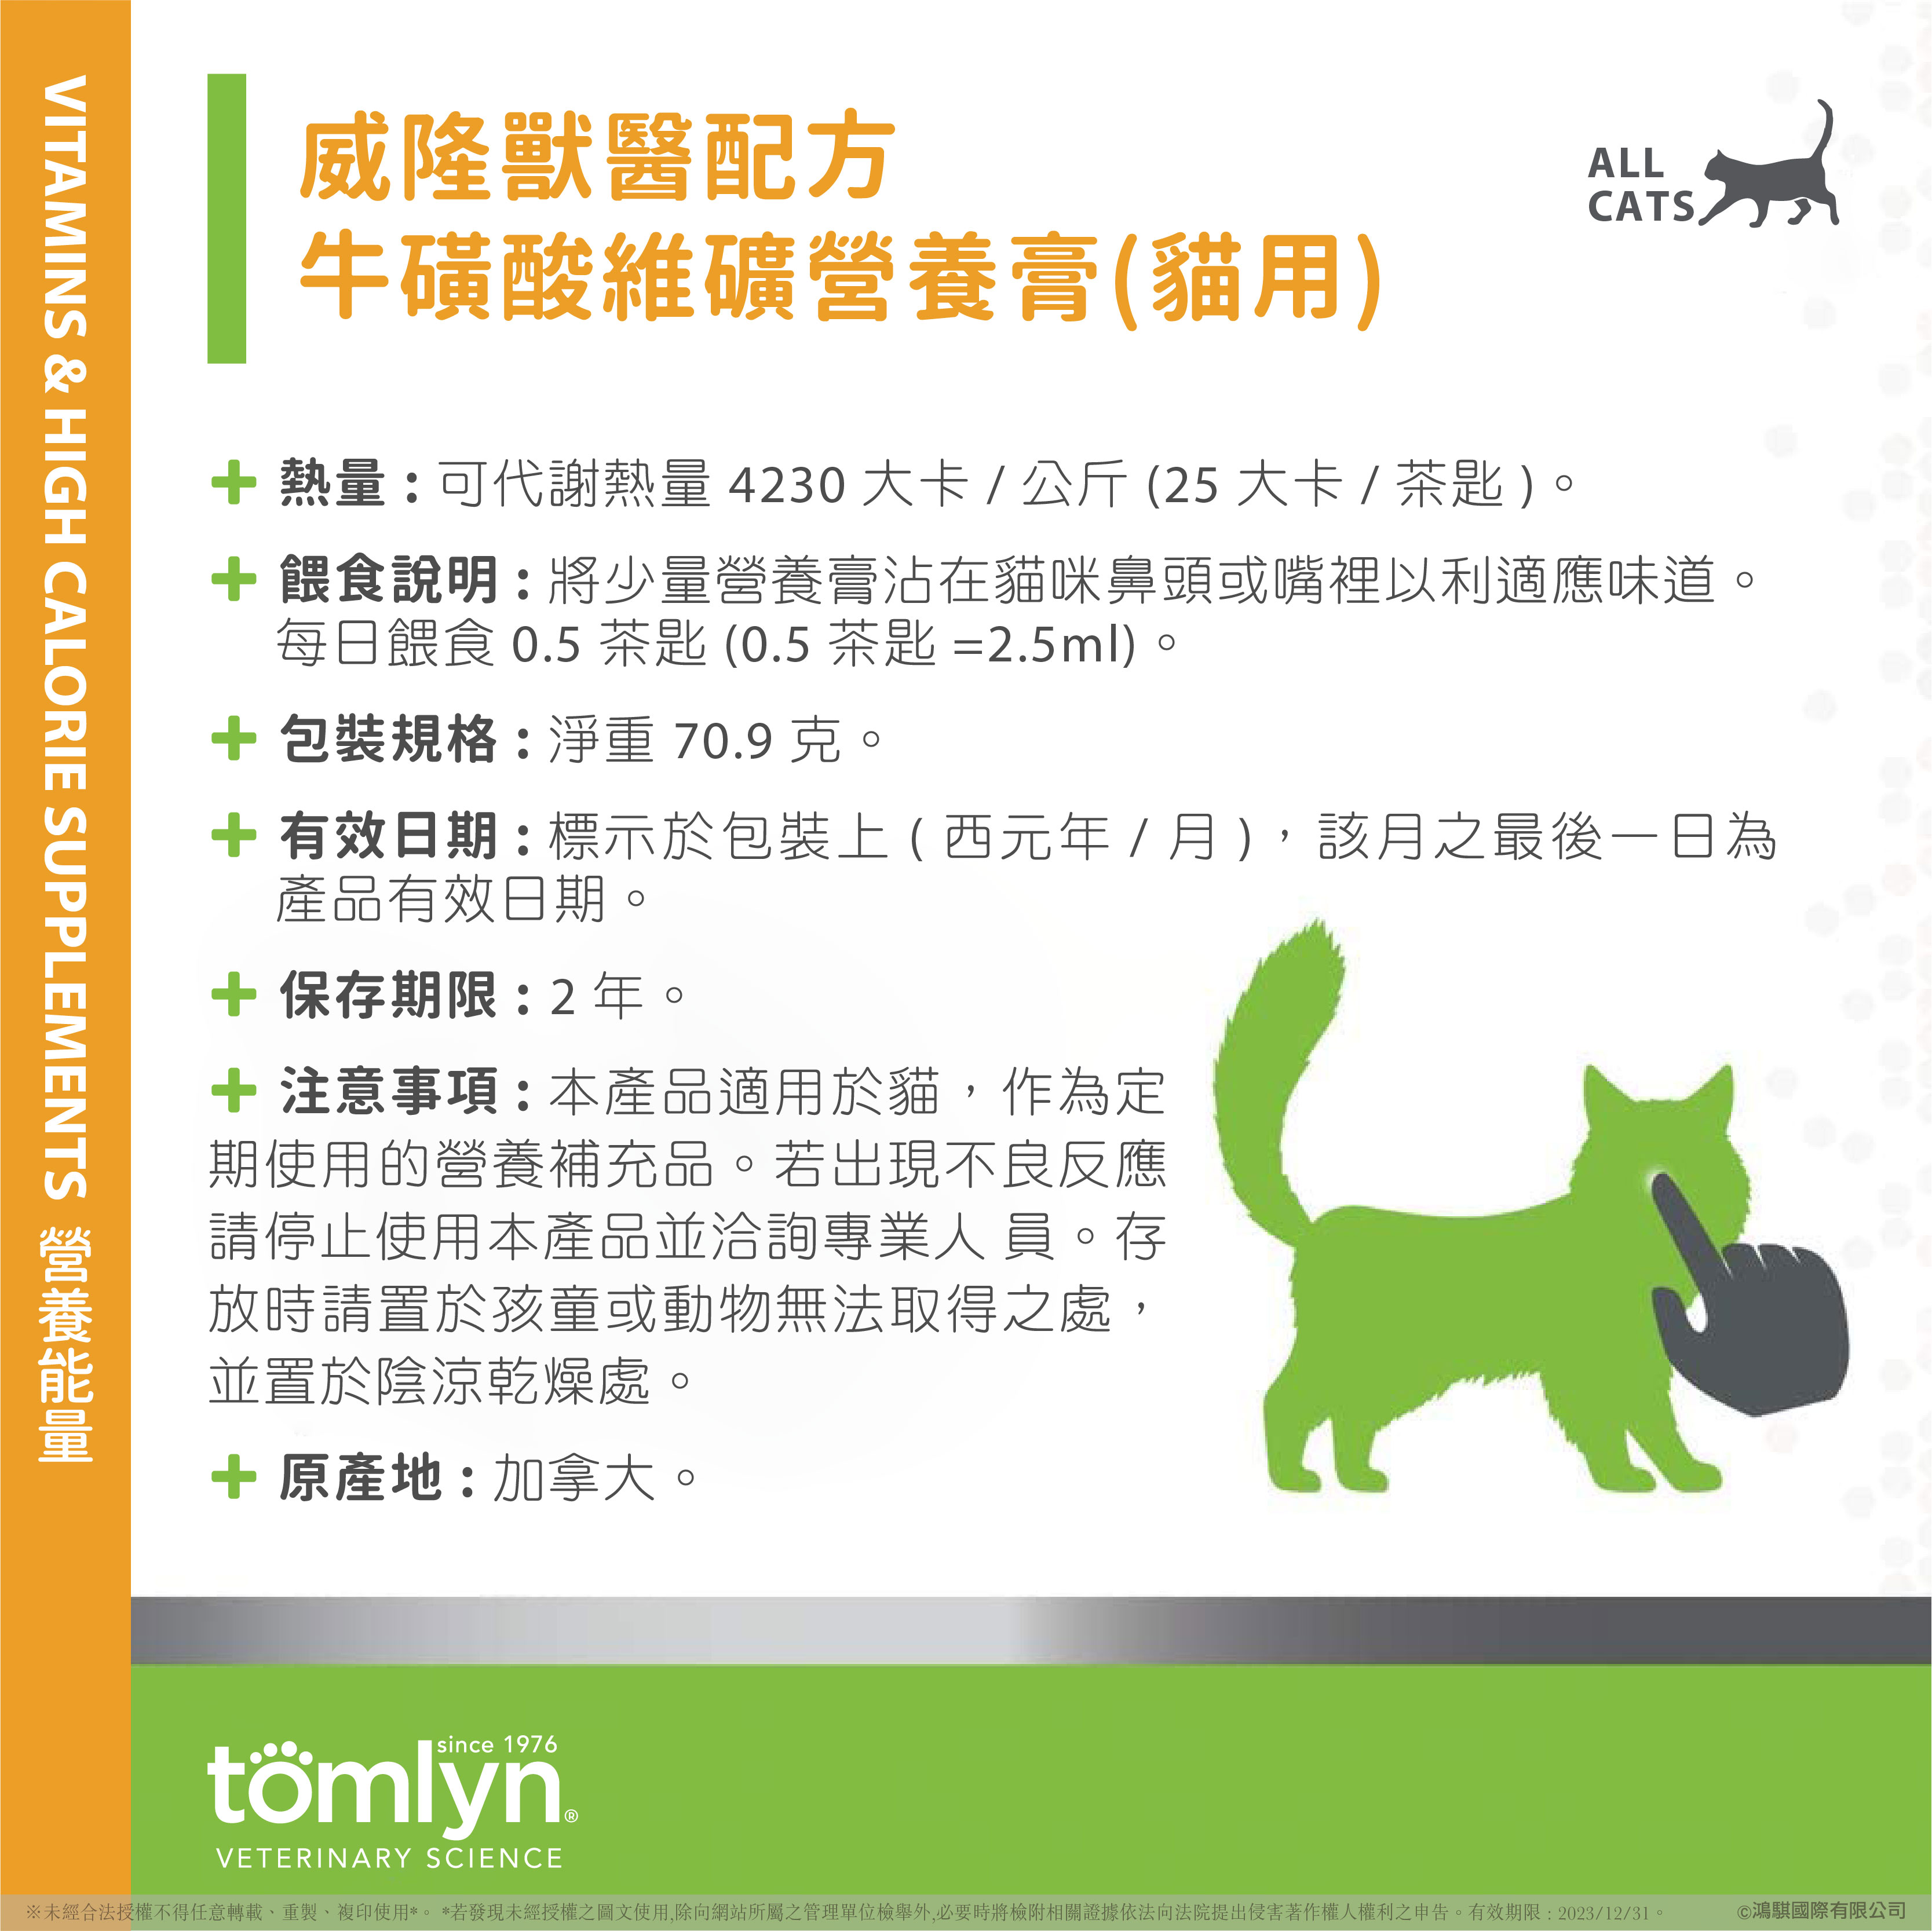 【Tomlyn】EPOSM 牛磺酸微礦營養膏-01